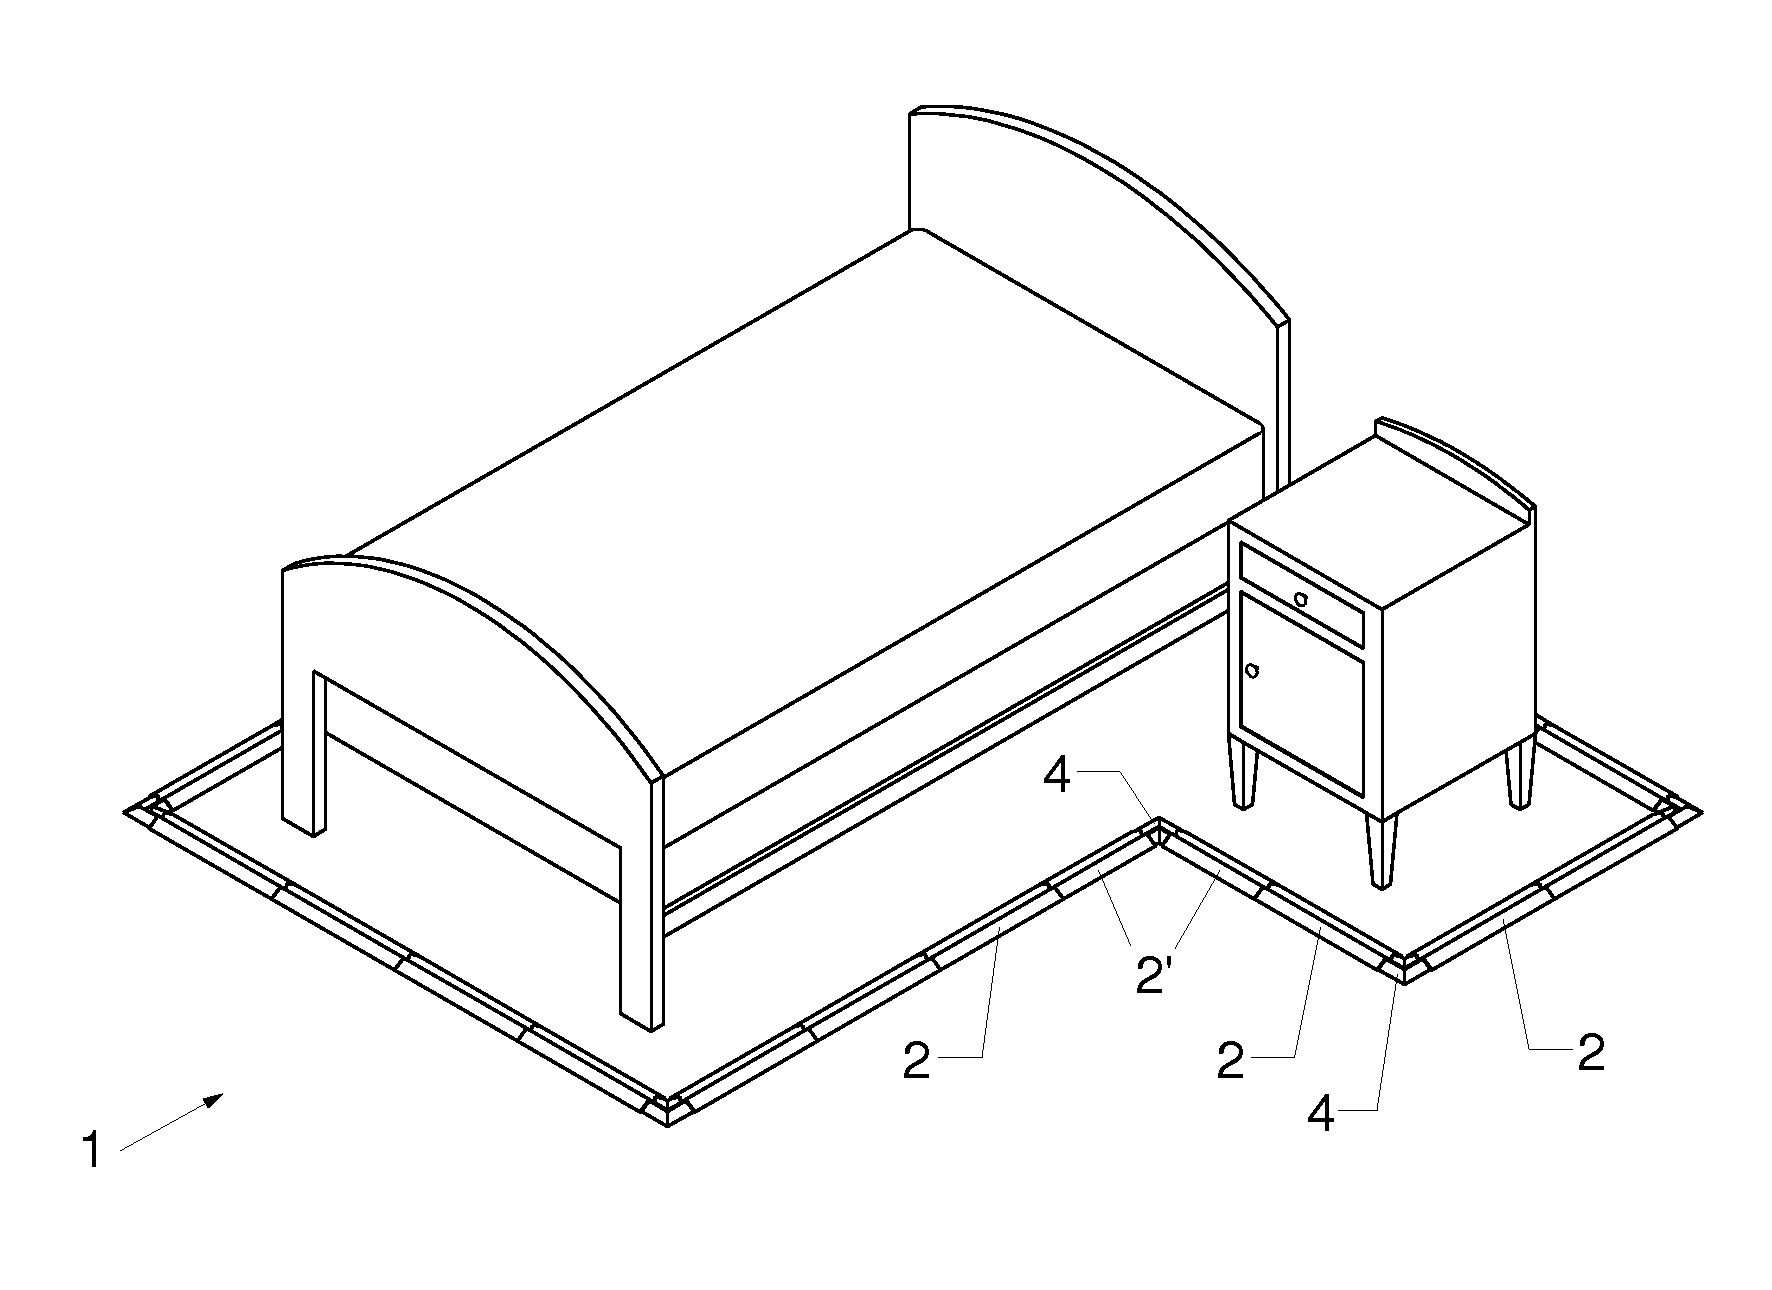 Modular bed bug trap system